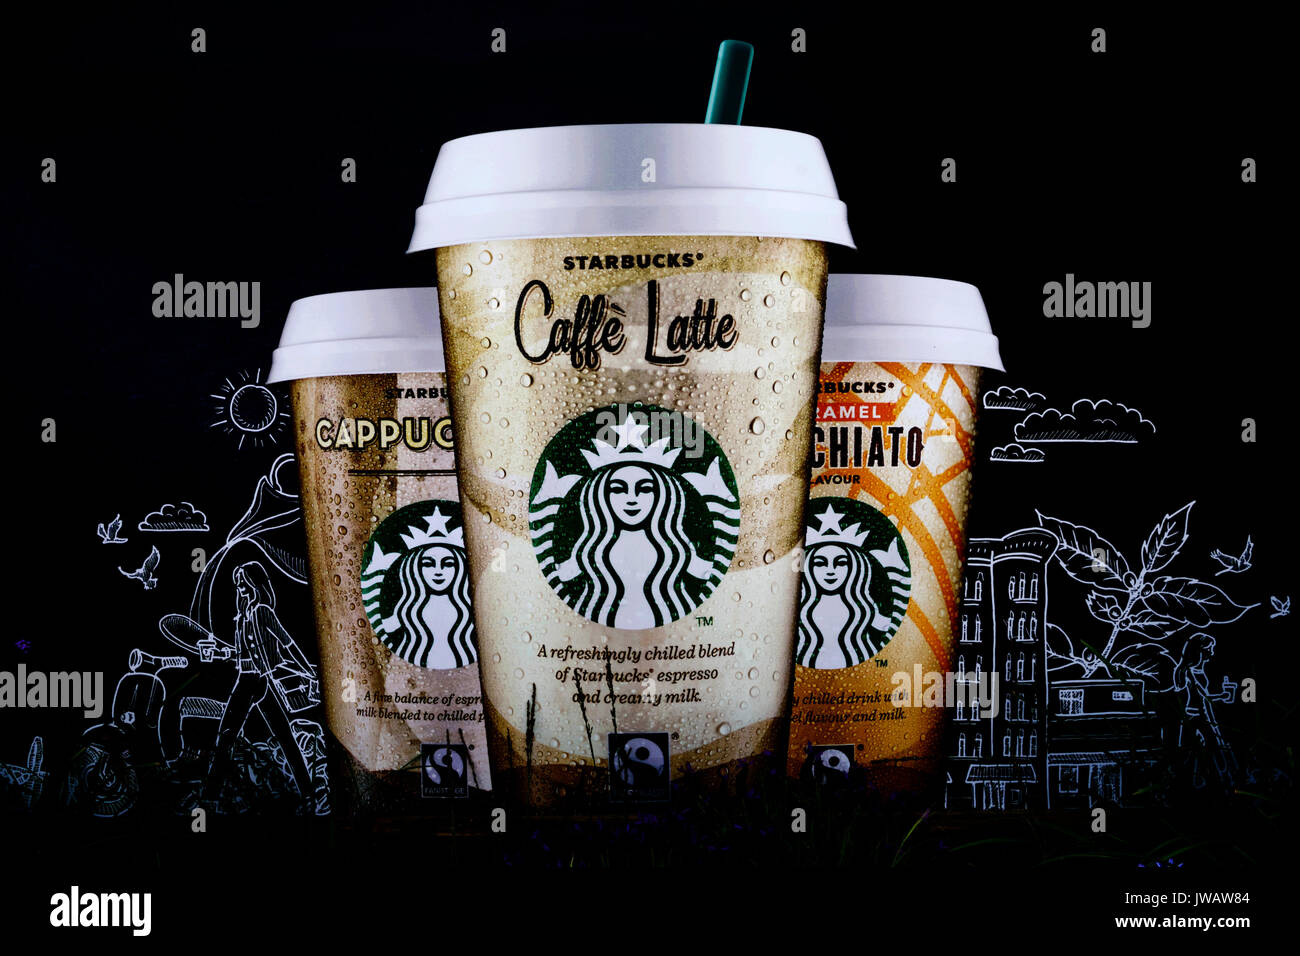 Starbucks Coffee Caffe Latte Chilled Brand Advertising Poster Stock